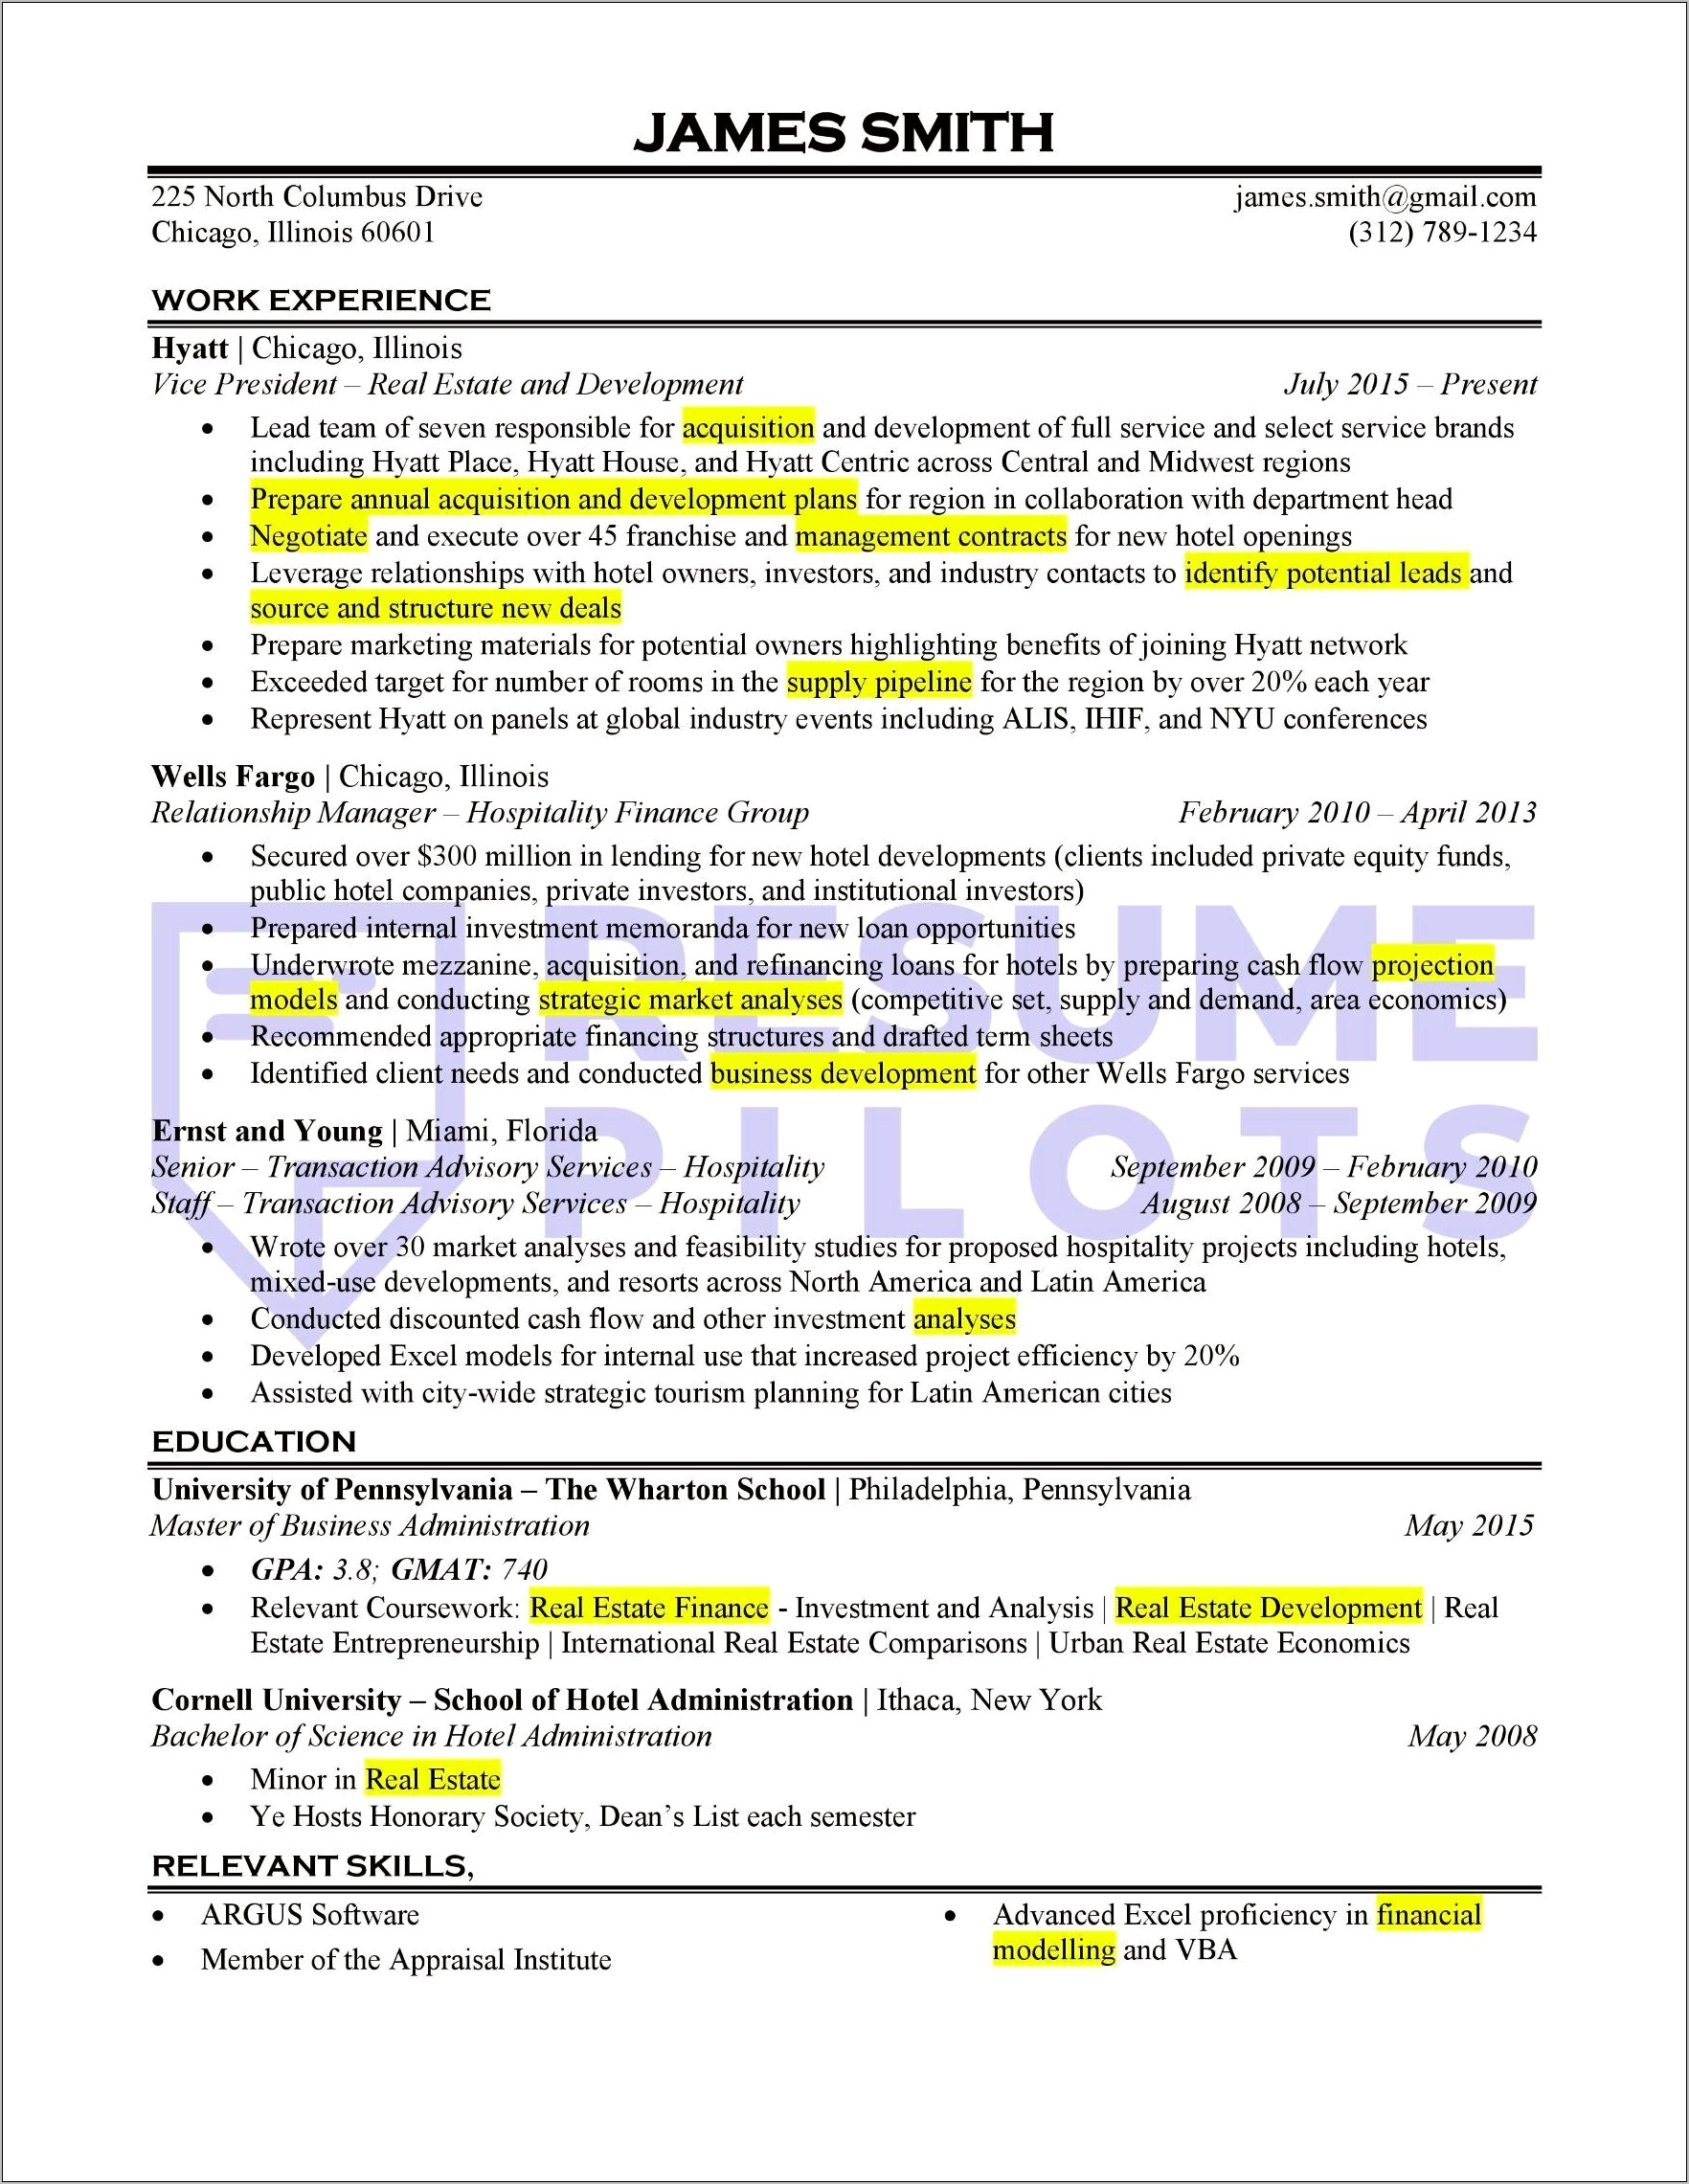 Resume Job Description Free Scan